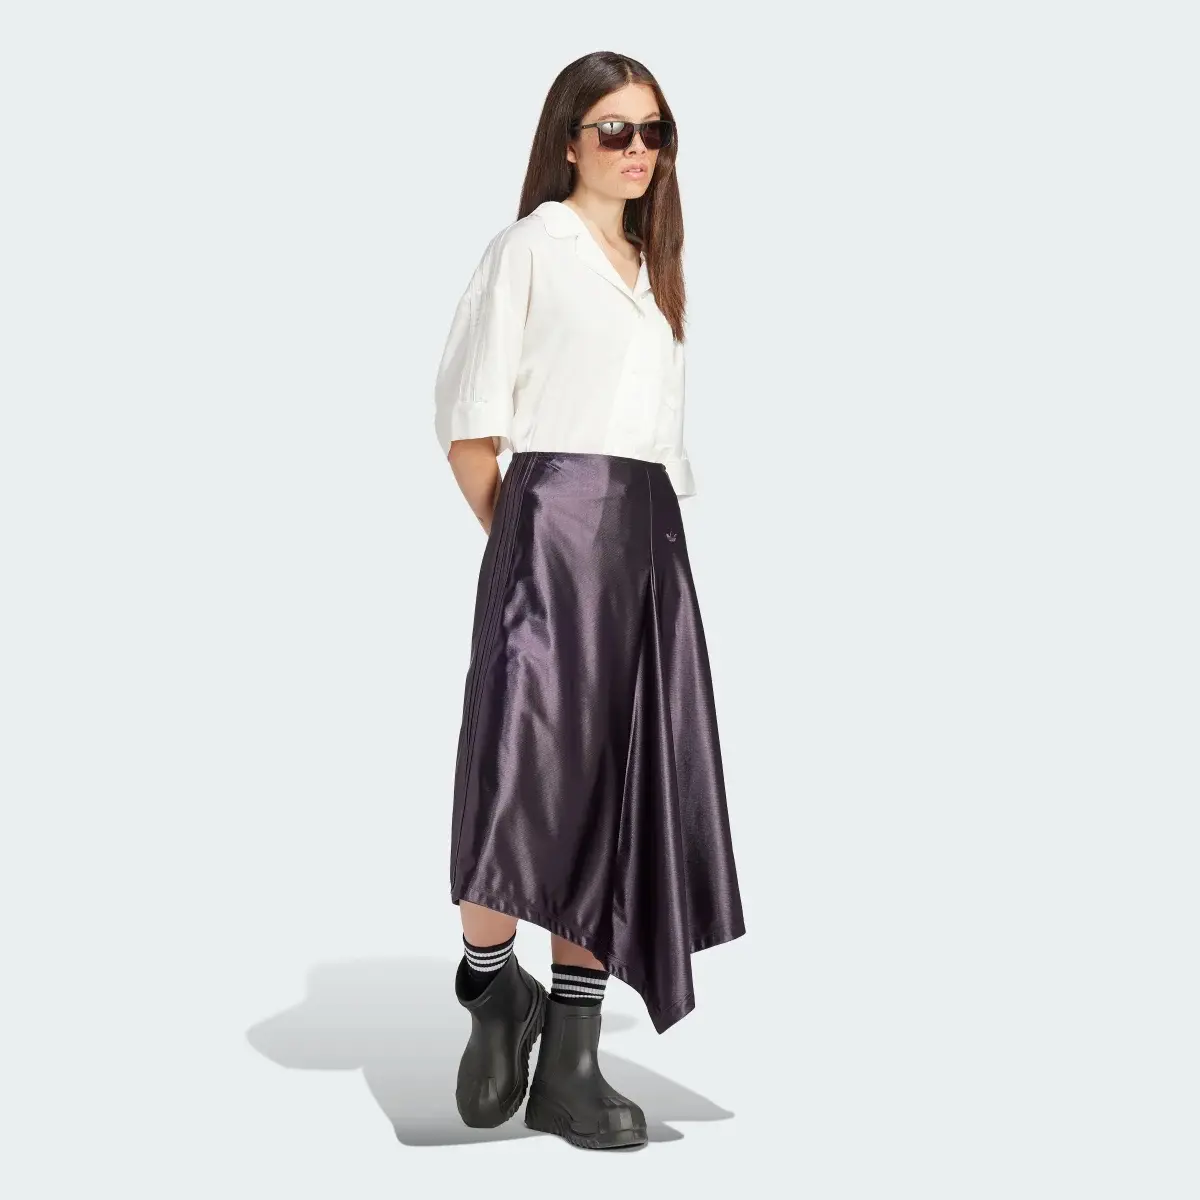 Adidas High-Waisted Satin Skirt. 3